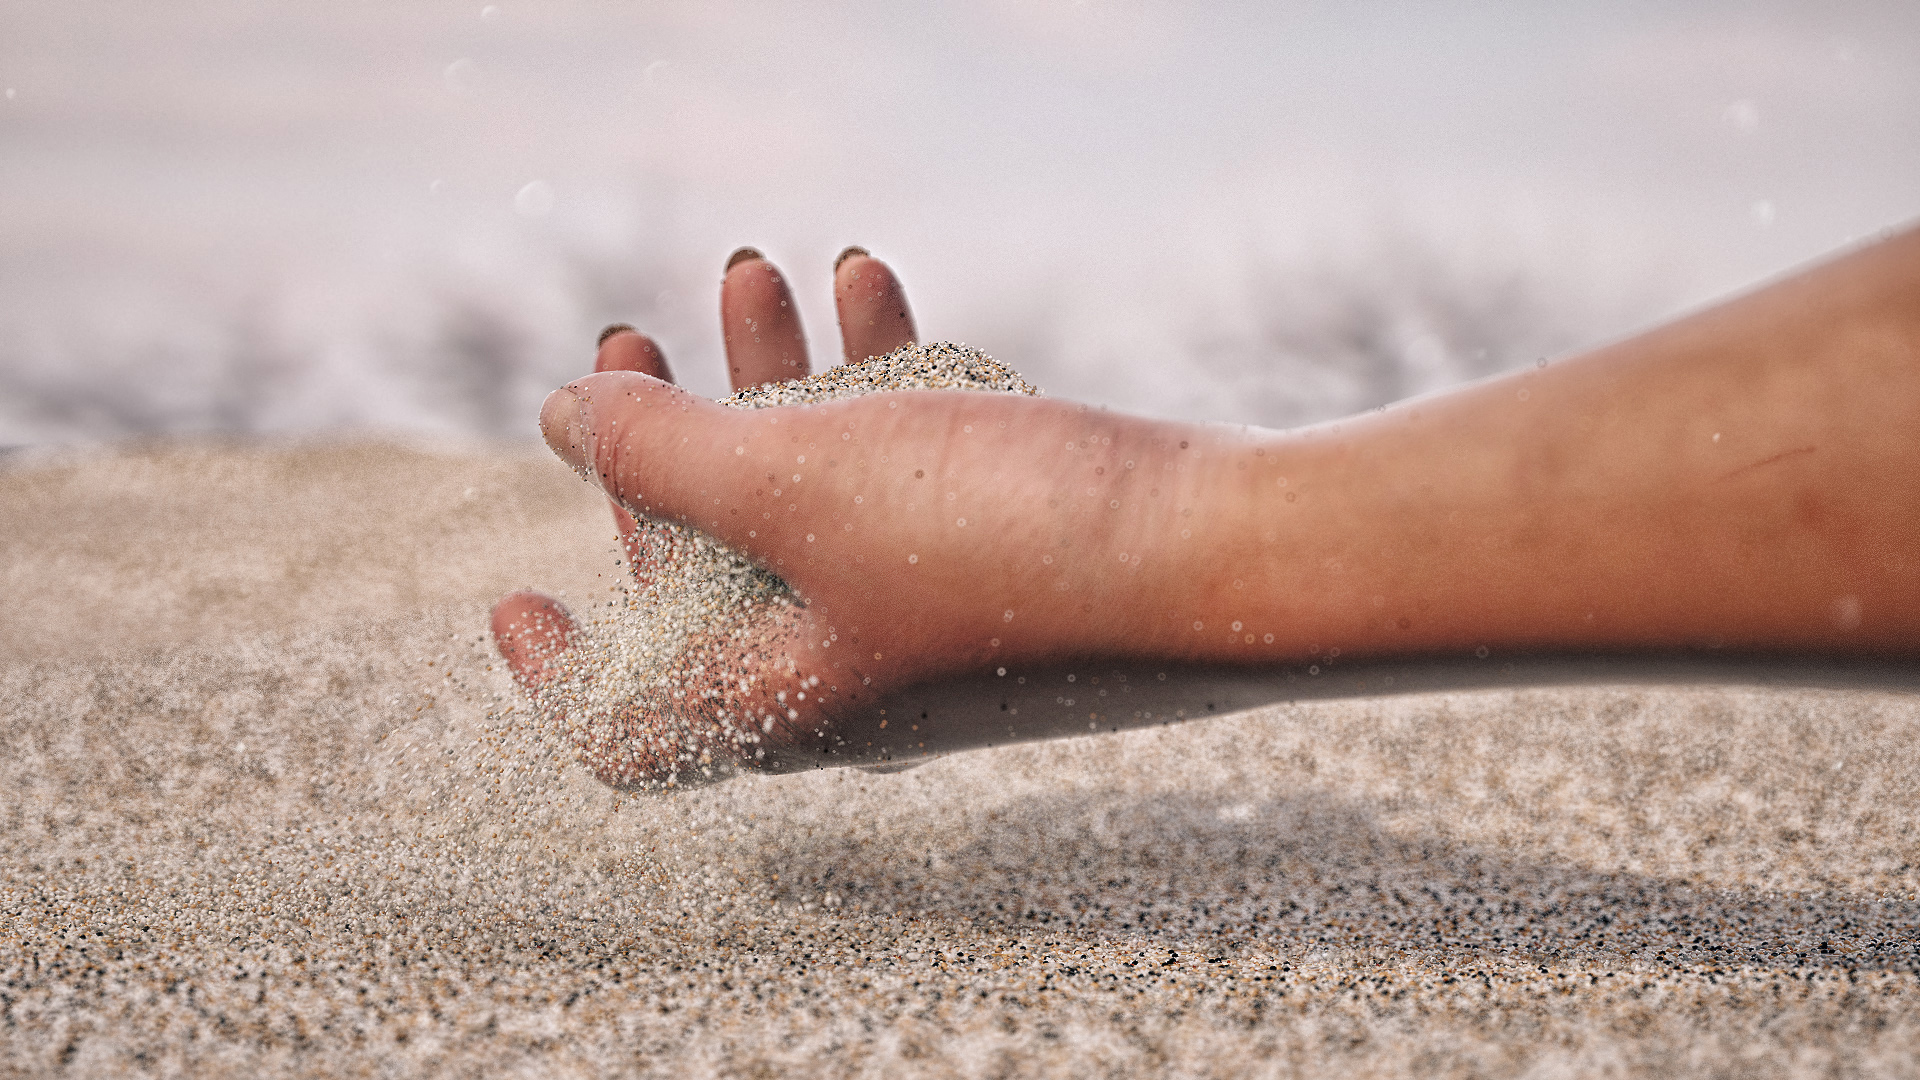 Мокрая девушка на пляже развалилась на песке